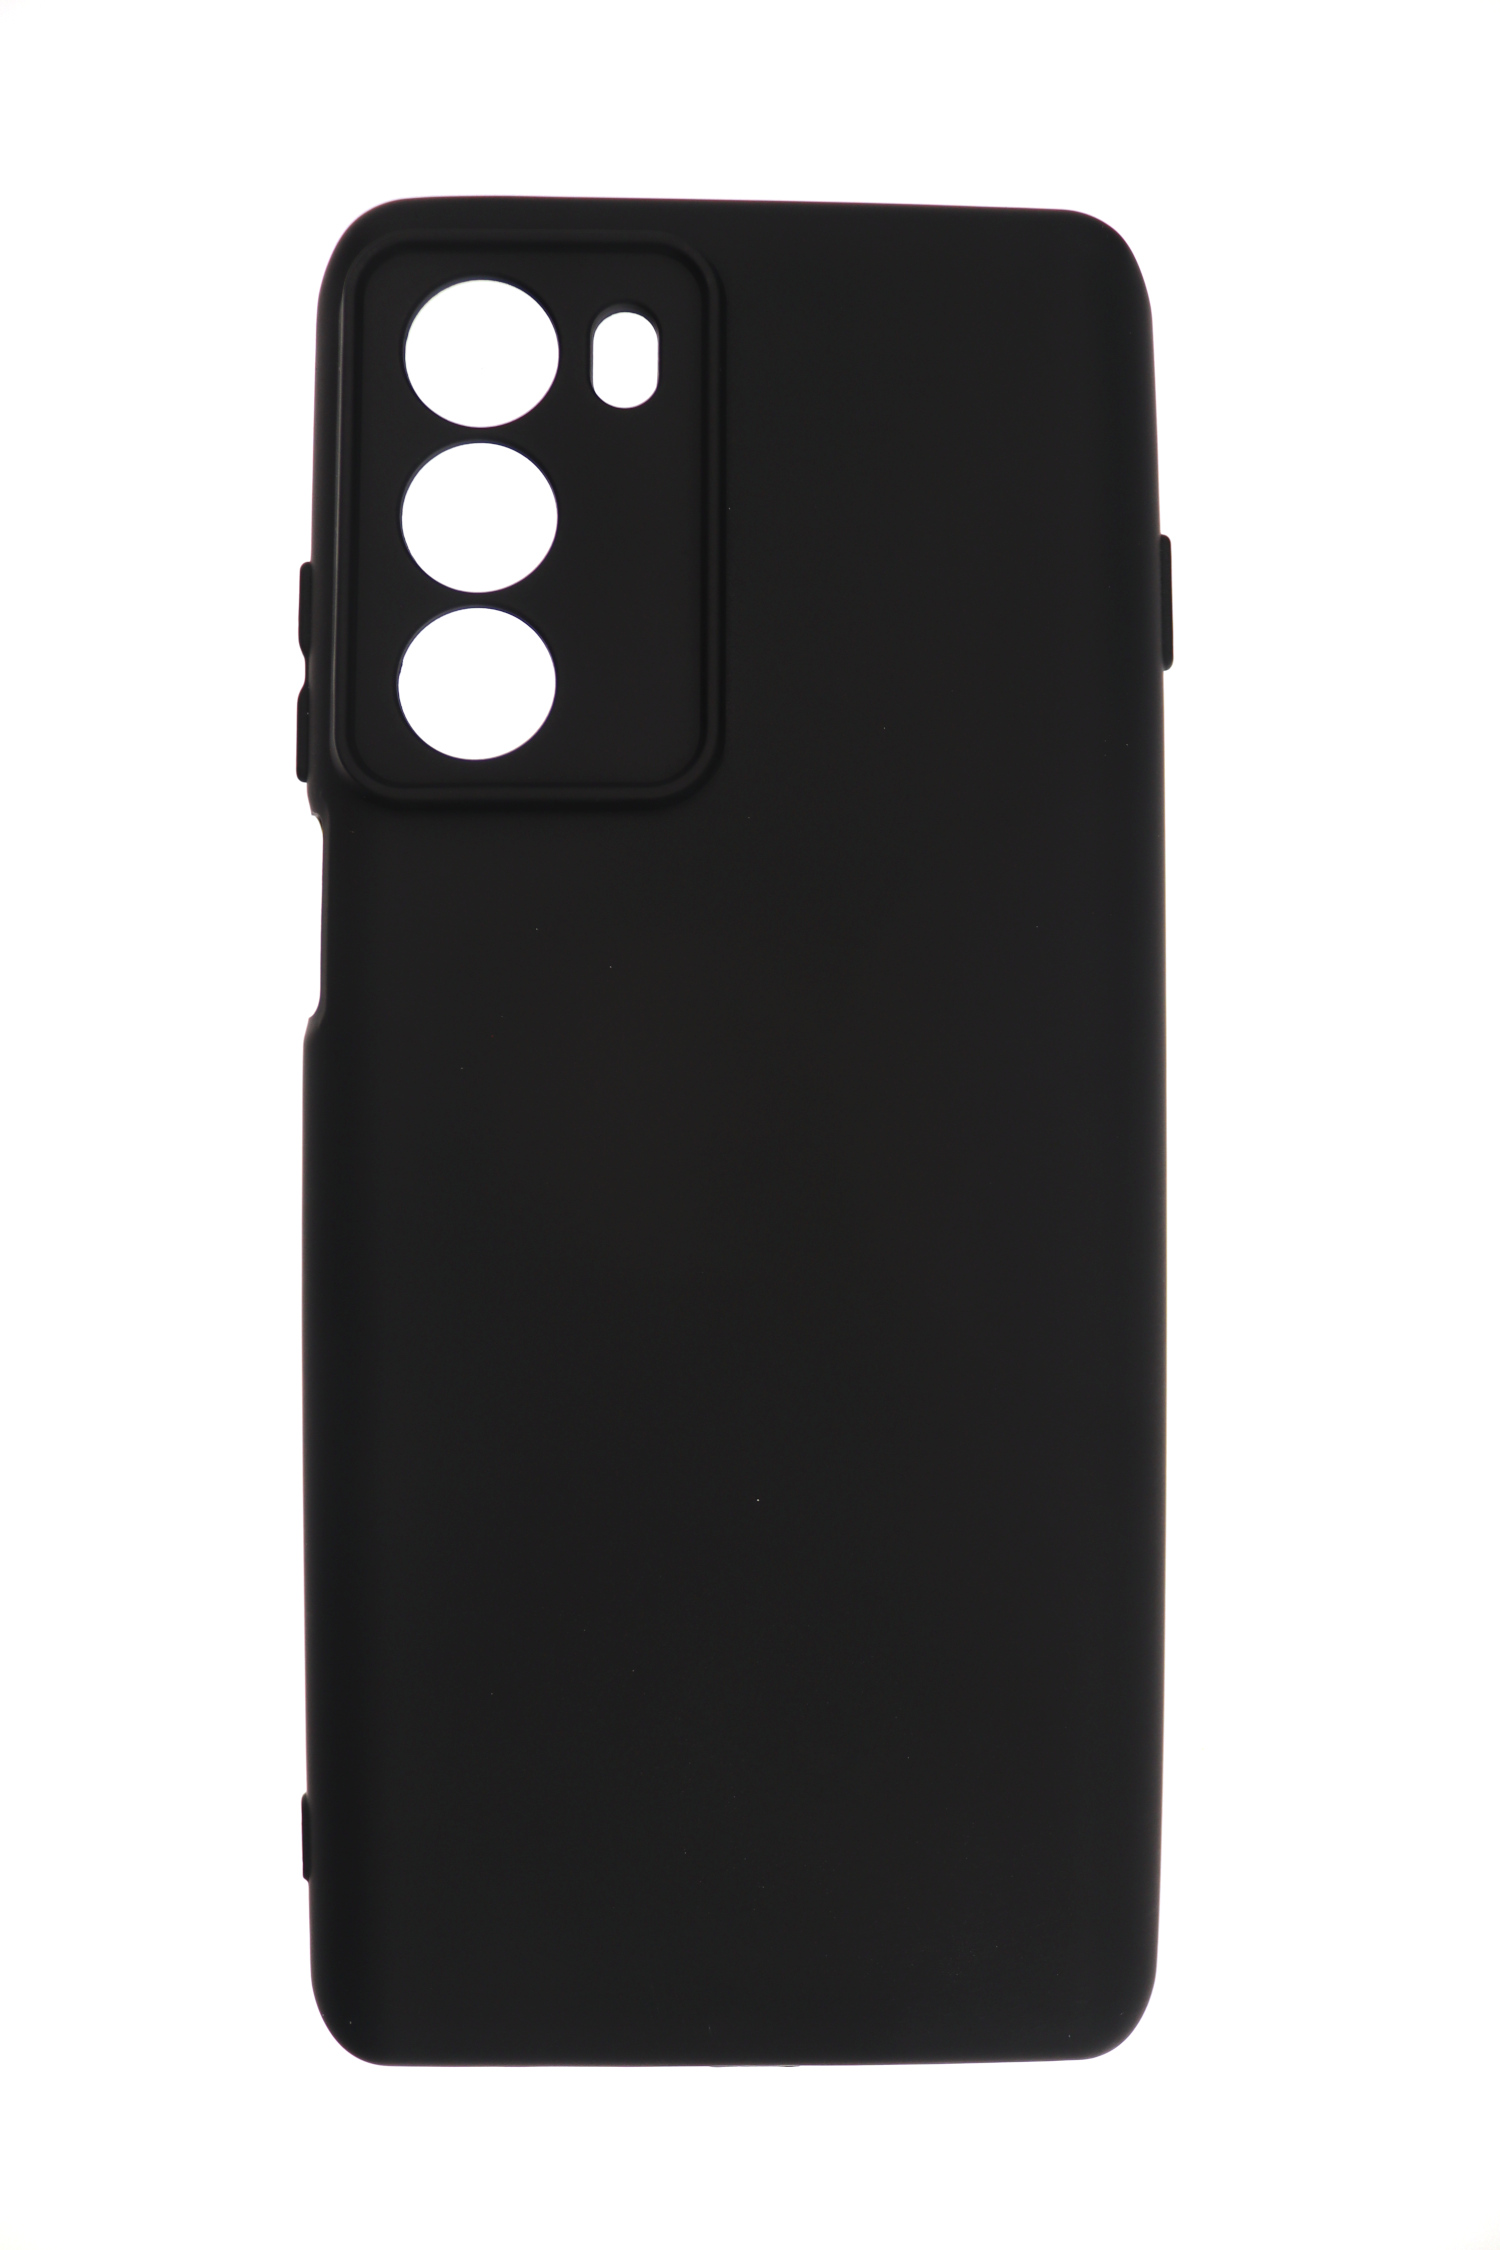 JAMCOVER Silikon 5G, Case, g200 schwarz Motorola, Backcover, moto